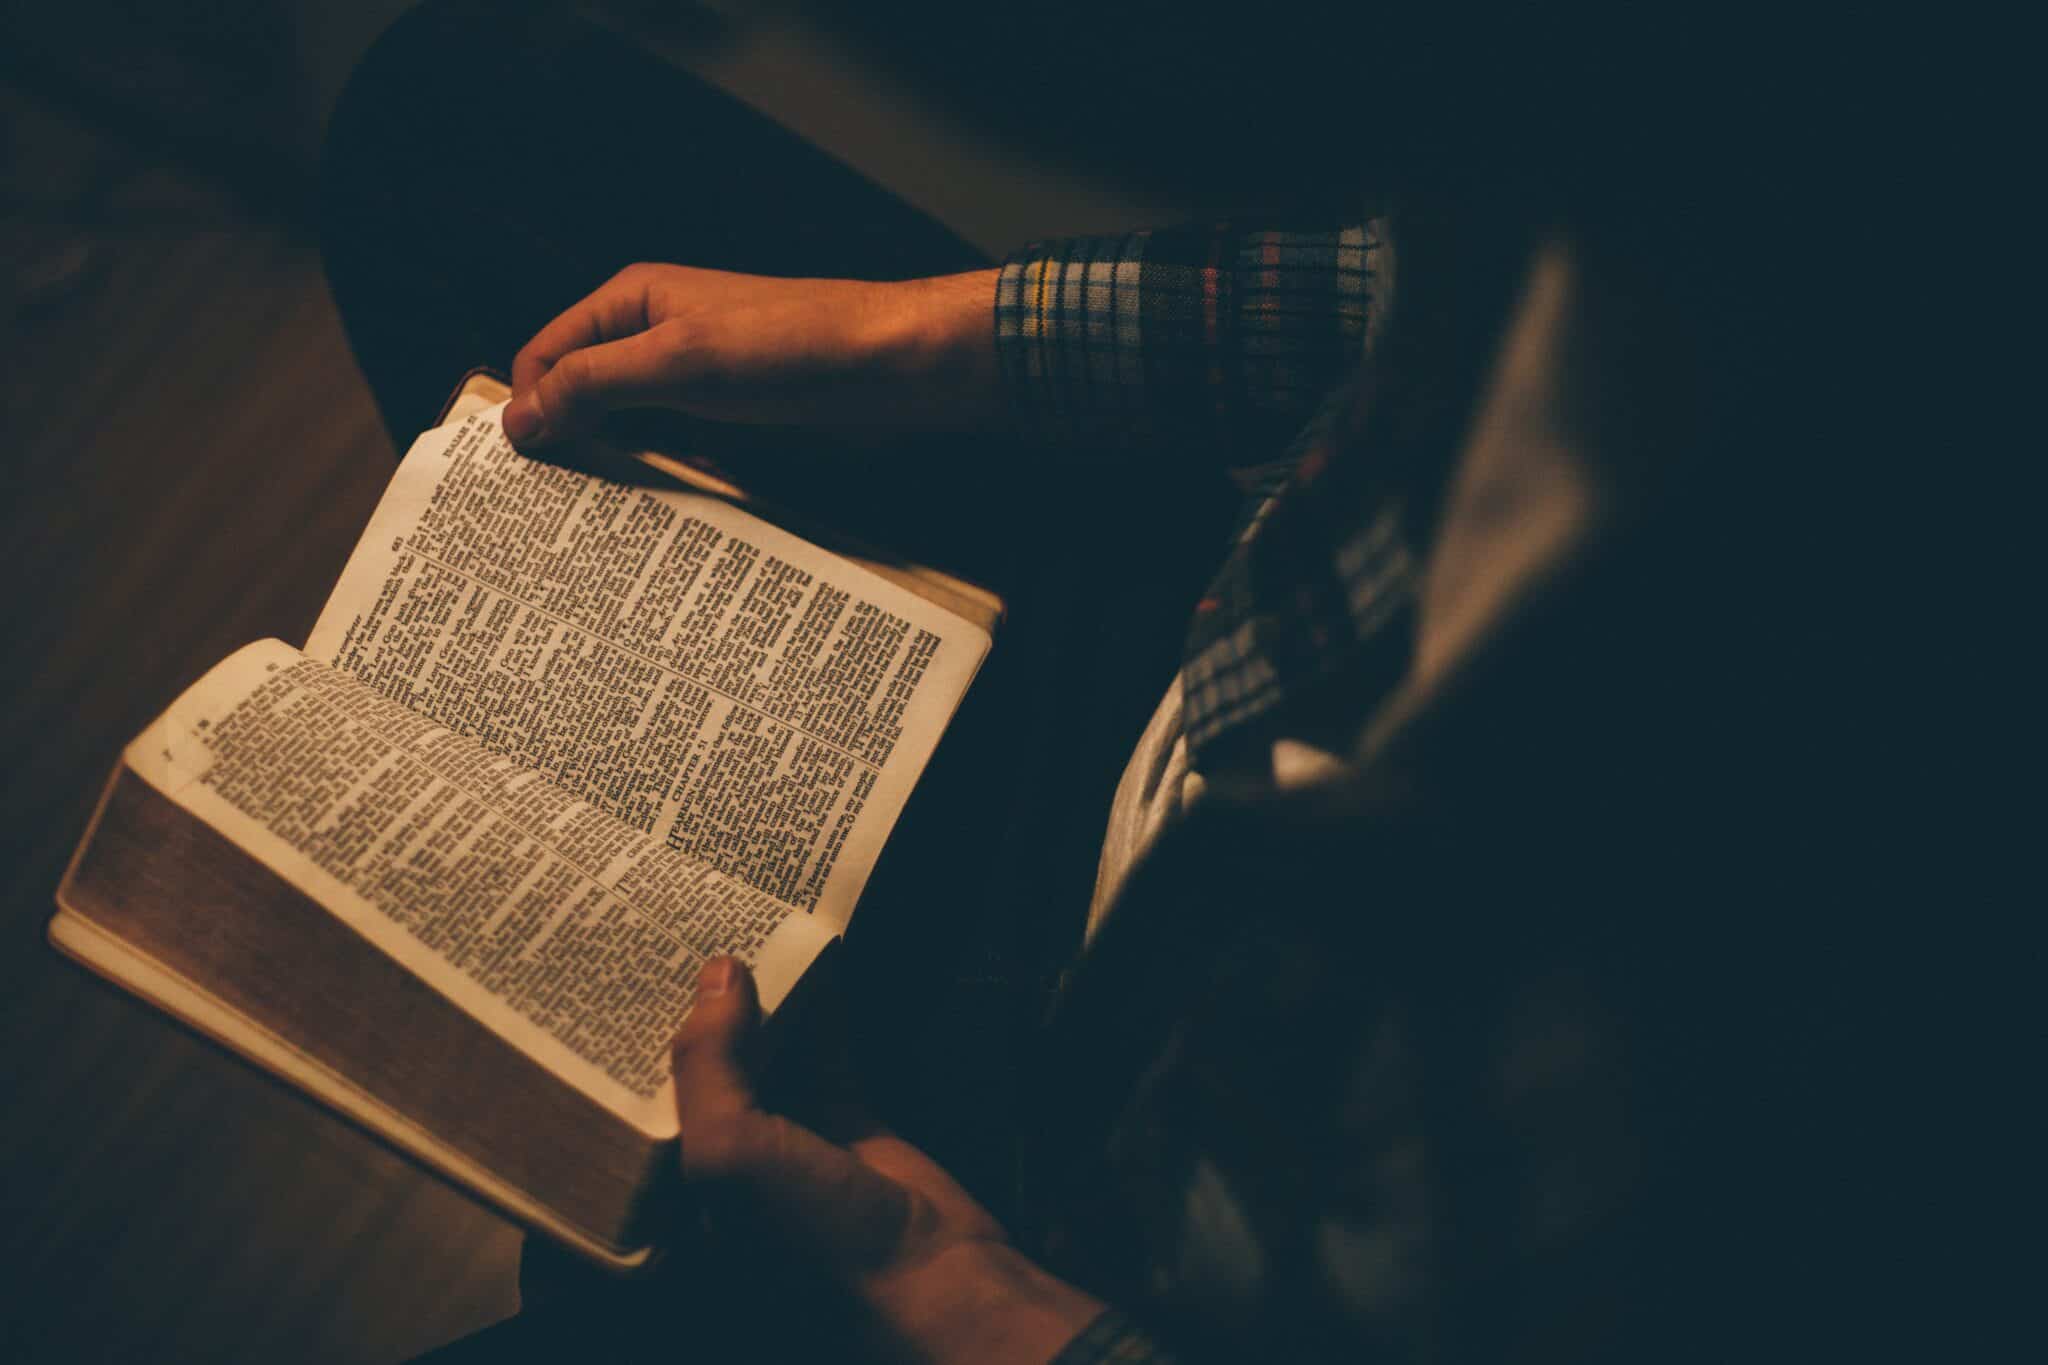 Man reading a bible | Photo by Priscilla Du Preez on Unsplash